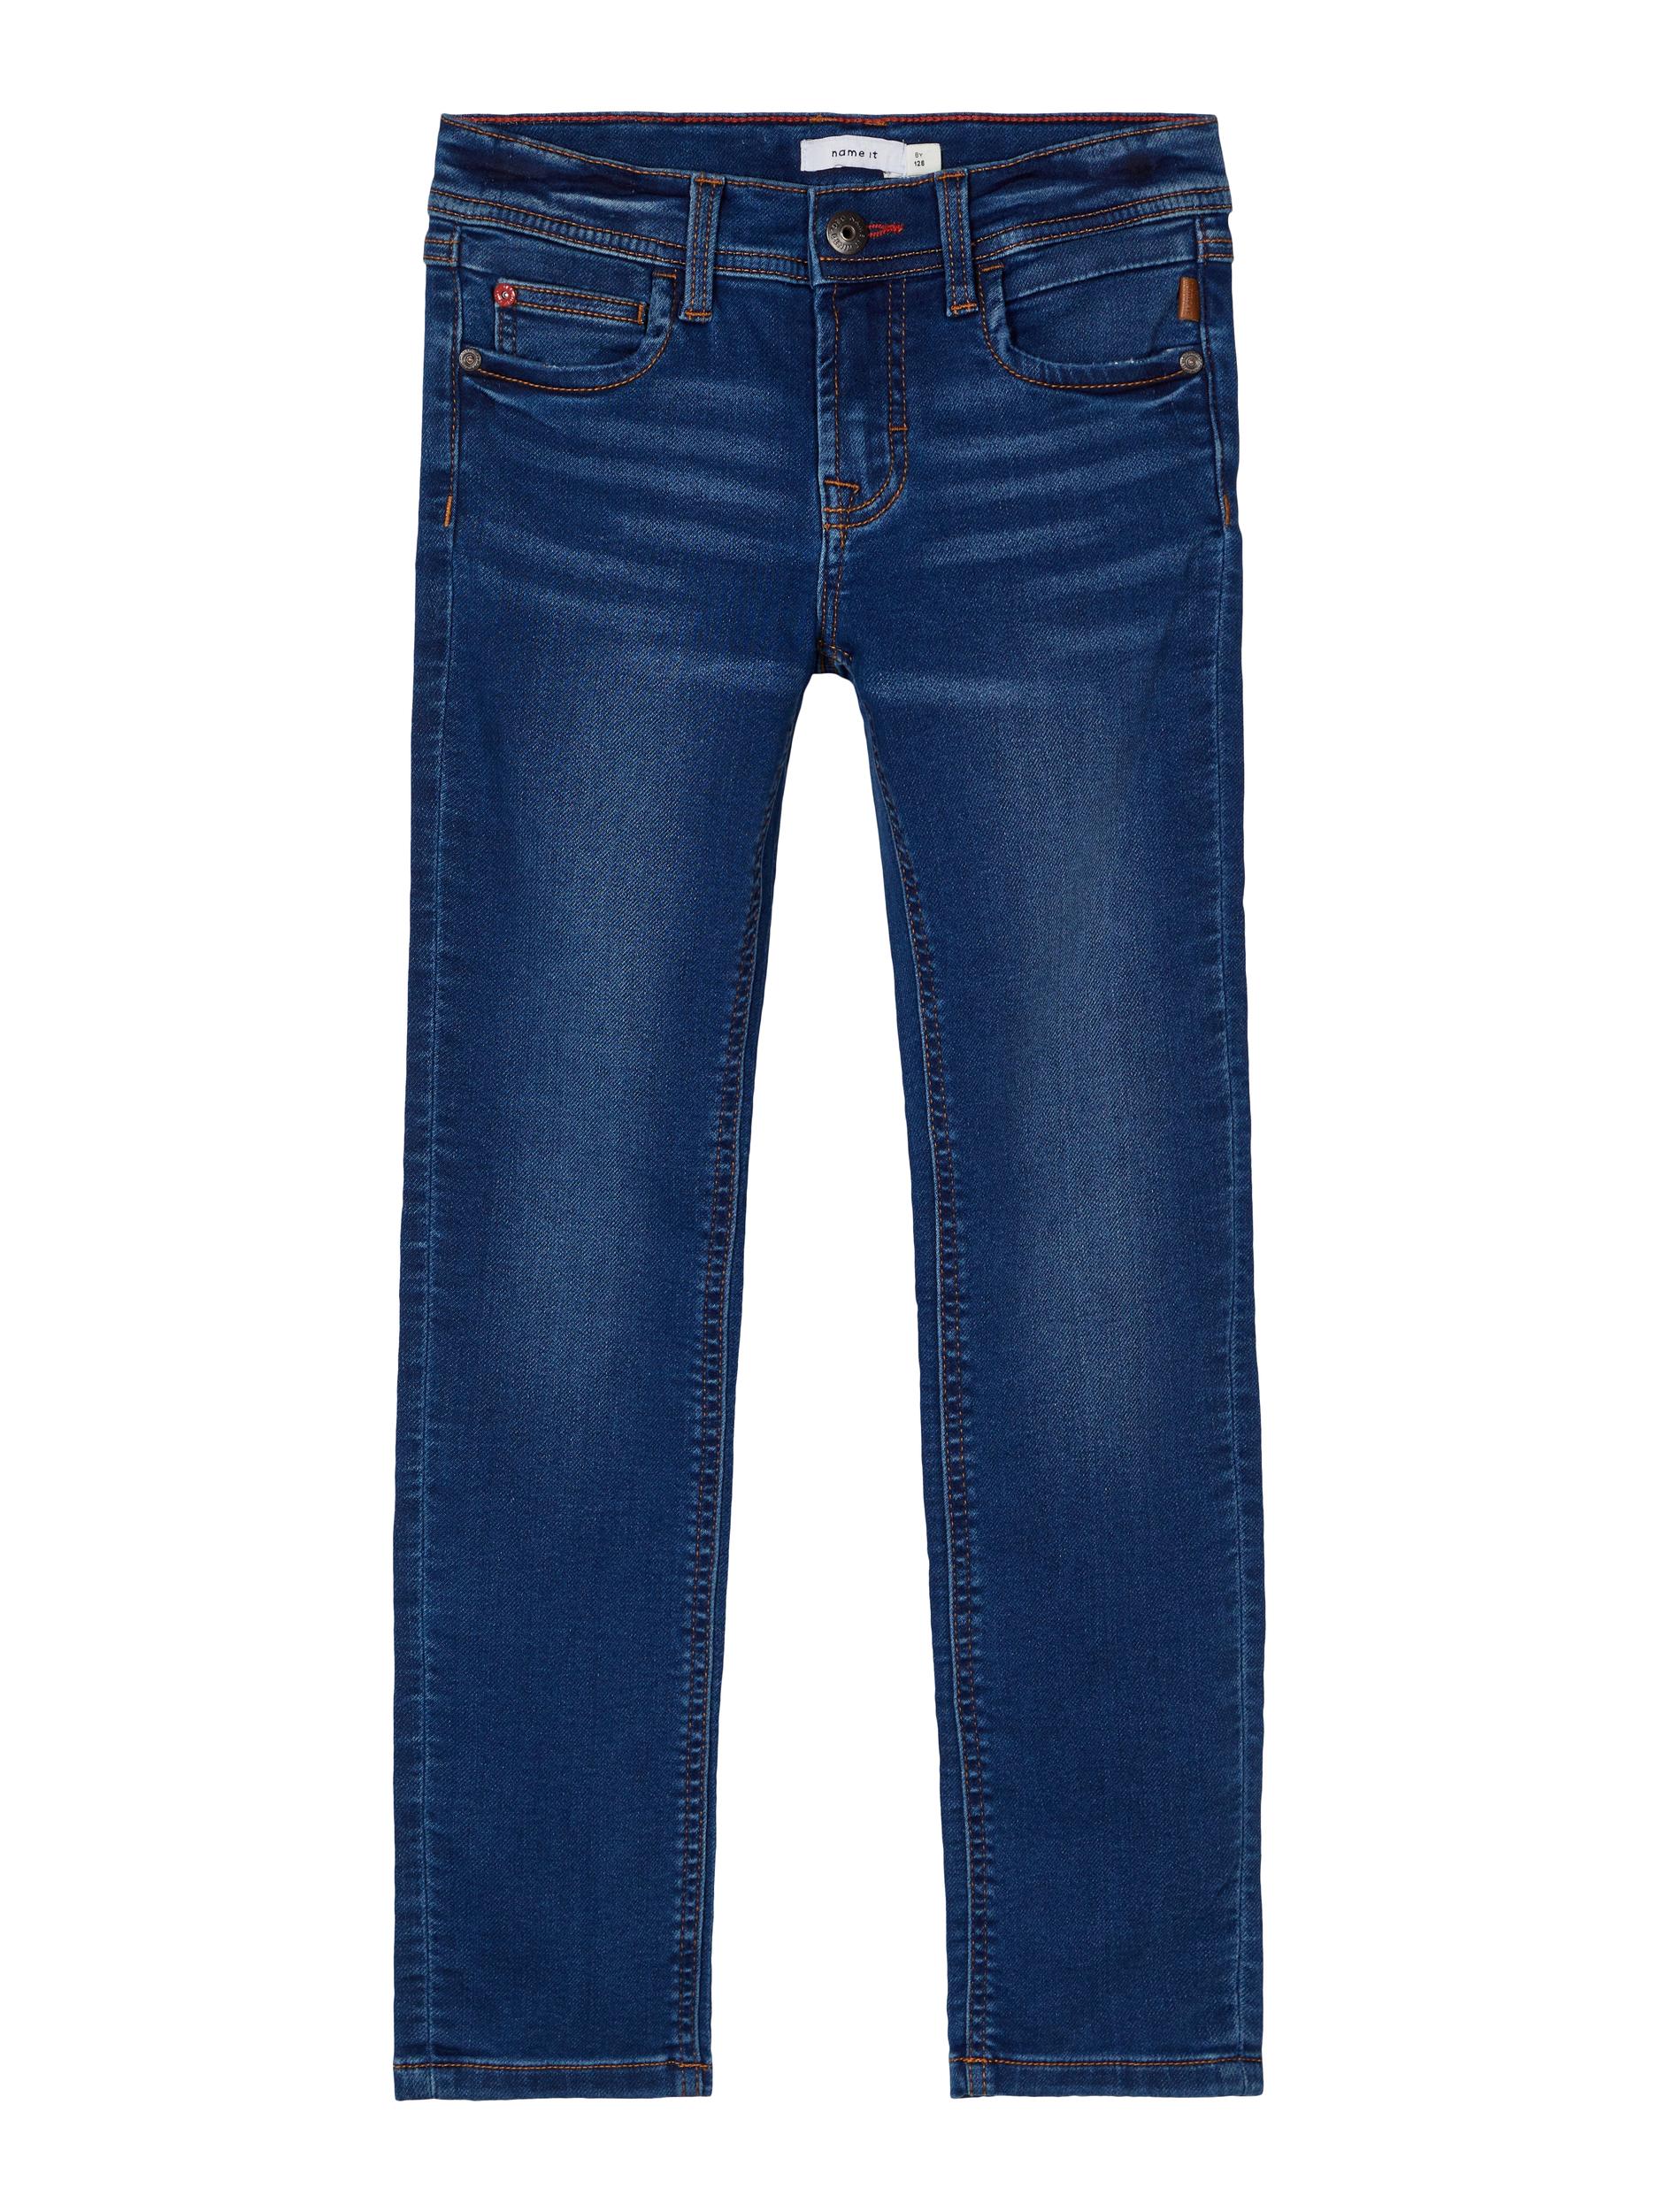  Theo Times Jeans, Dark Blue Denim, 146 cm